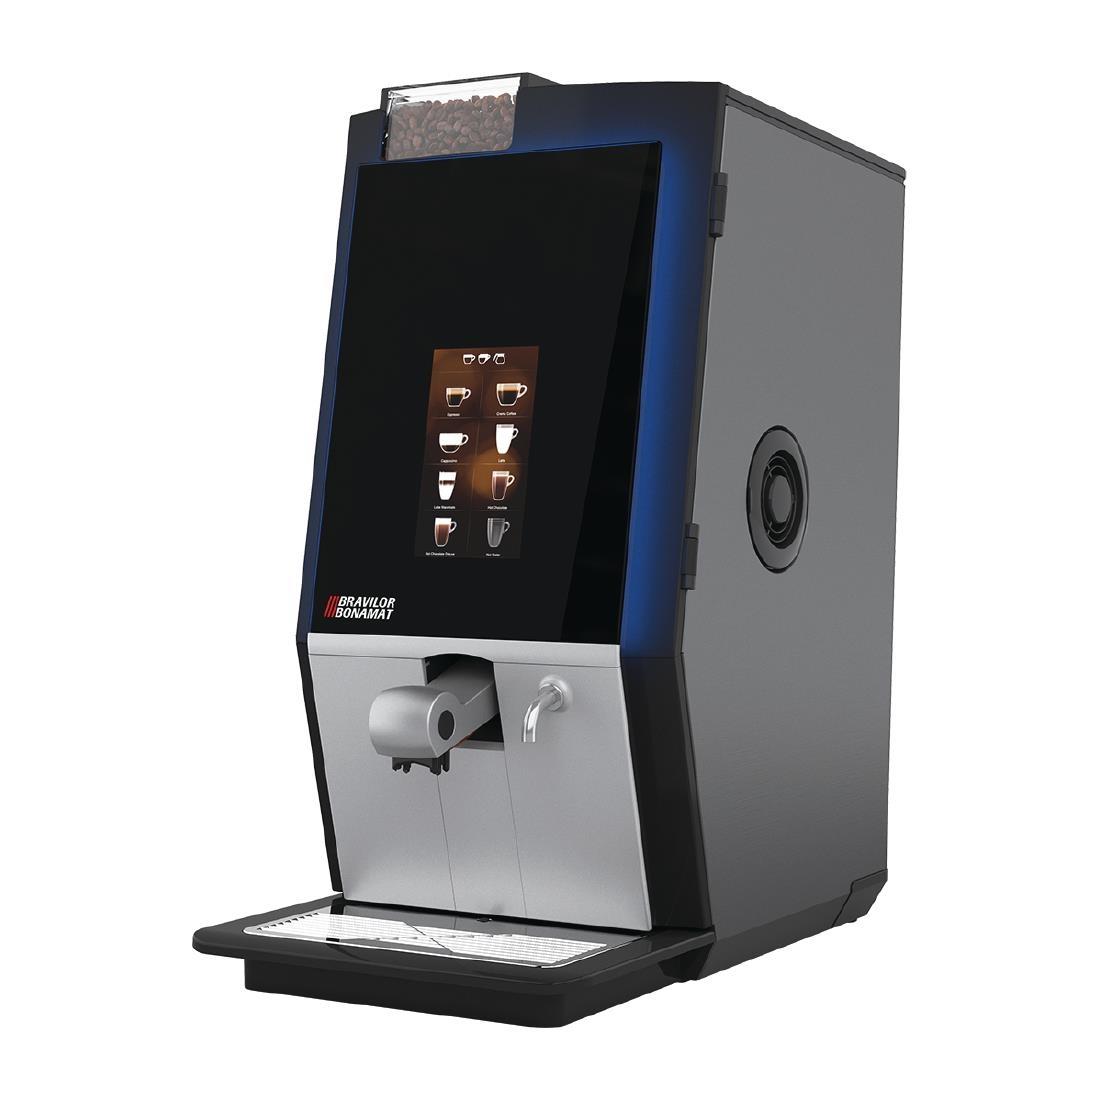 Bravilor Esprecious 12 Bean to Cup Espresso Machine with Installation - DC698-WI  - 3